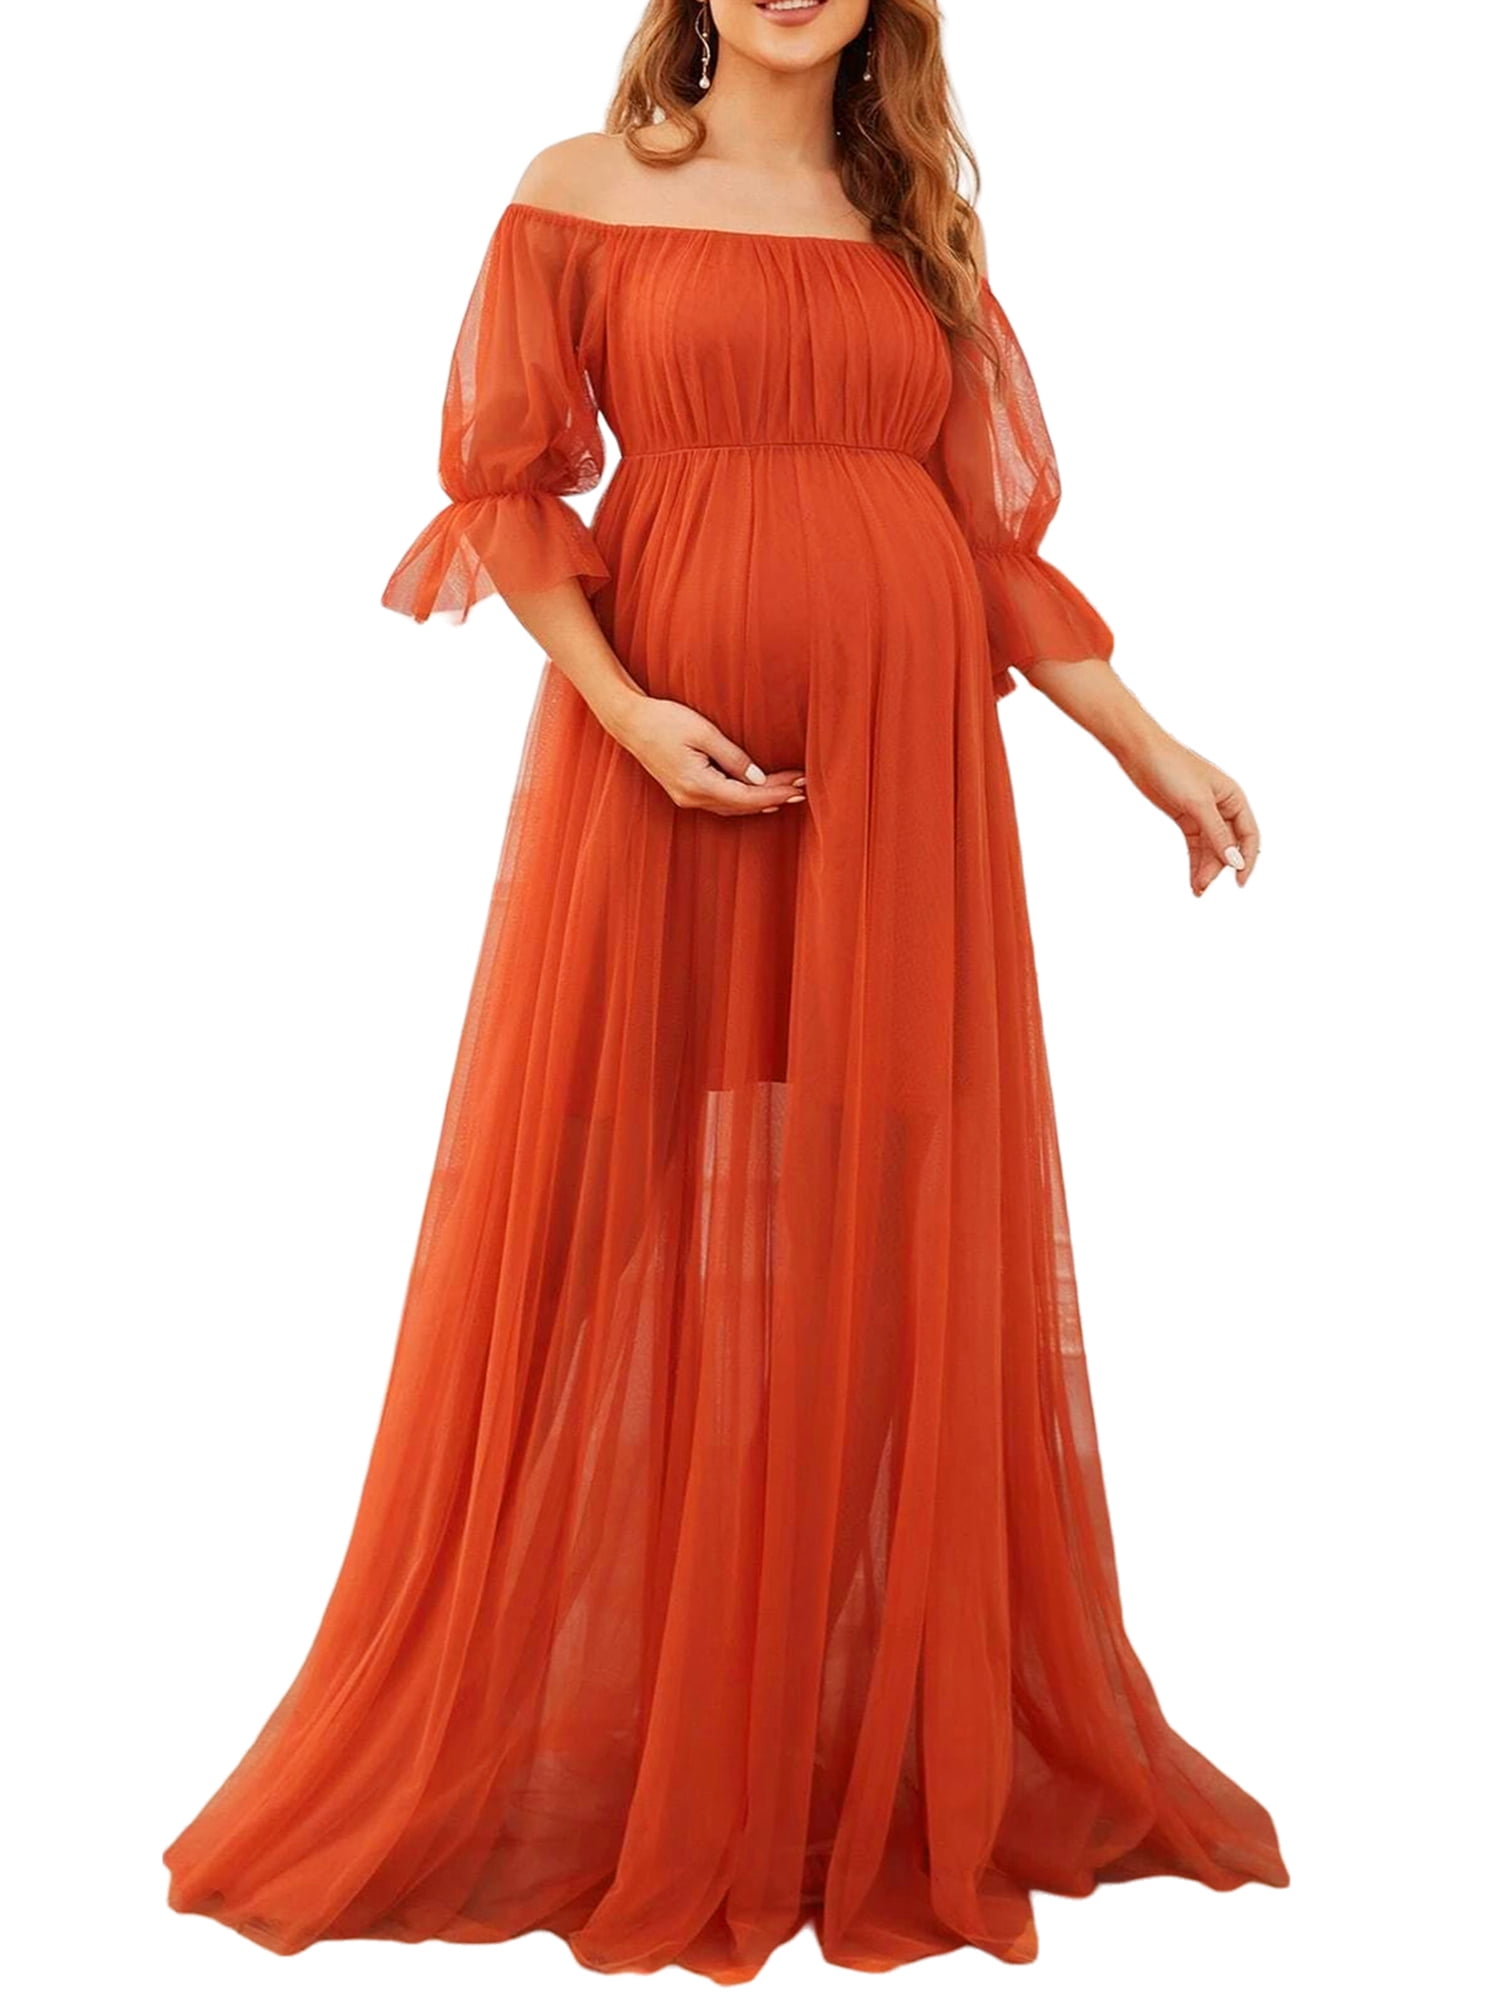 Sprifallbaby Women's Long Maternity Dresses Off Shoulder Short Sleeve Tulle  Gown Pregnancy Dress for Photoshoot, Orange 